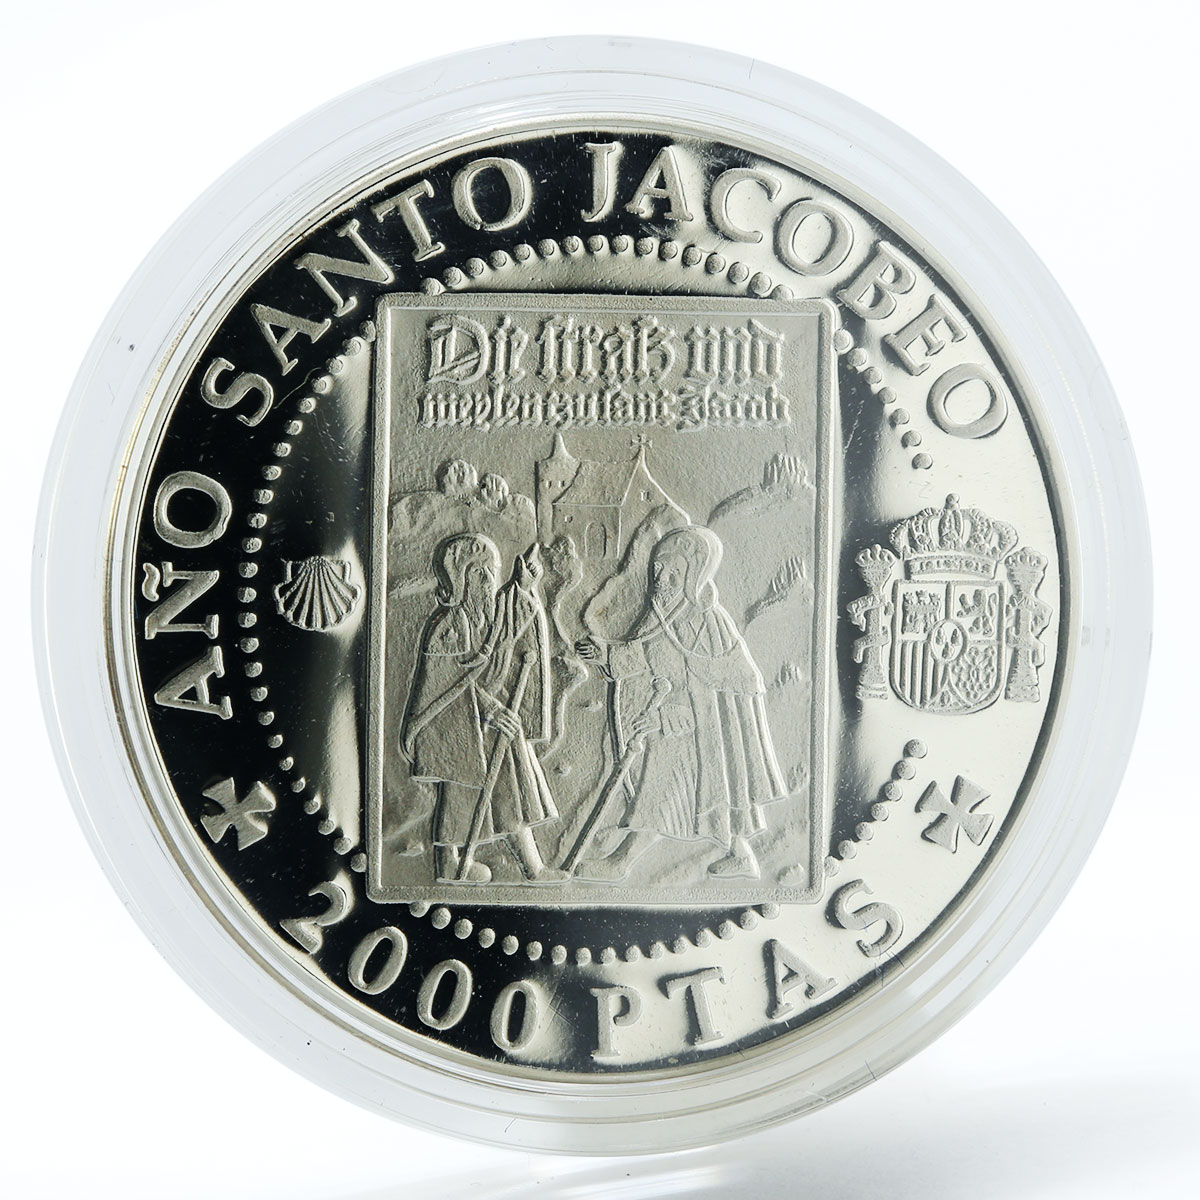 Spain 2000 pesetas Juan Carlos I German jacobean pilgrims silver coin 1993